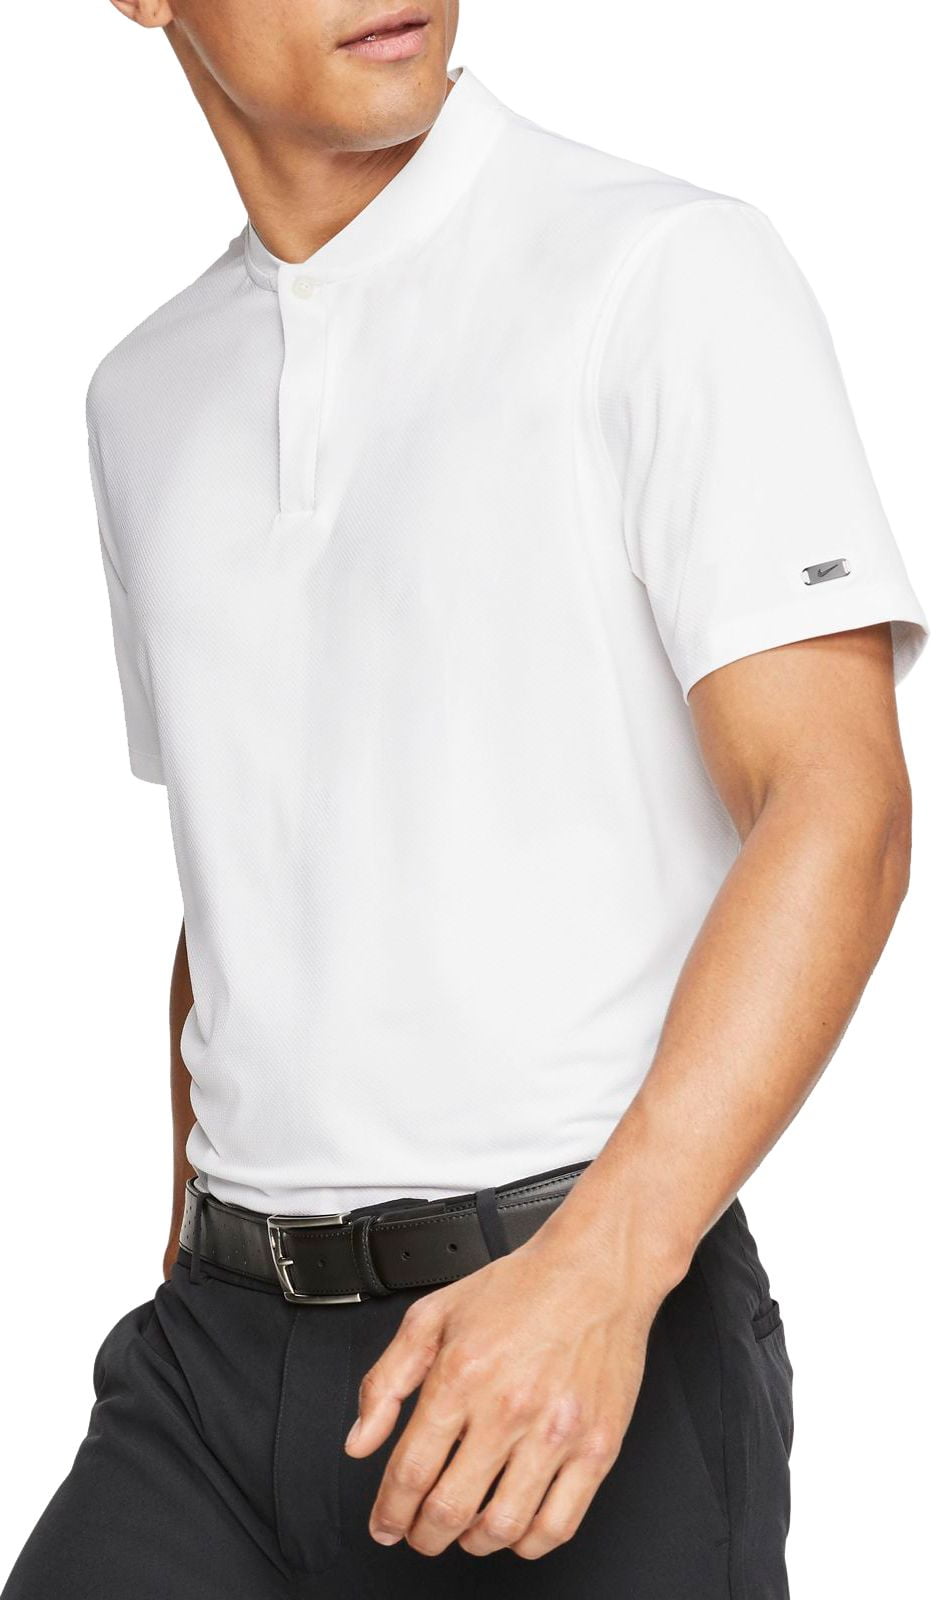 blade collar golf shirts